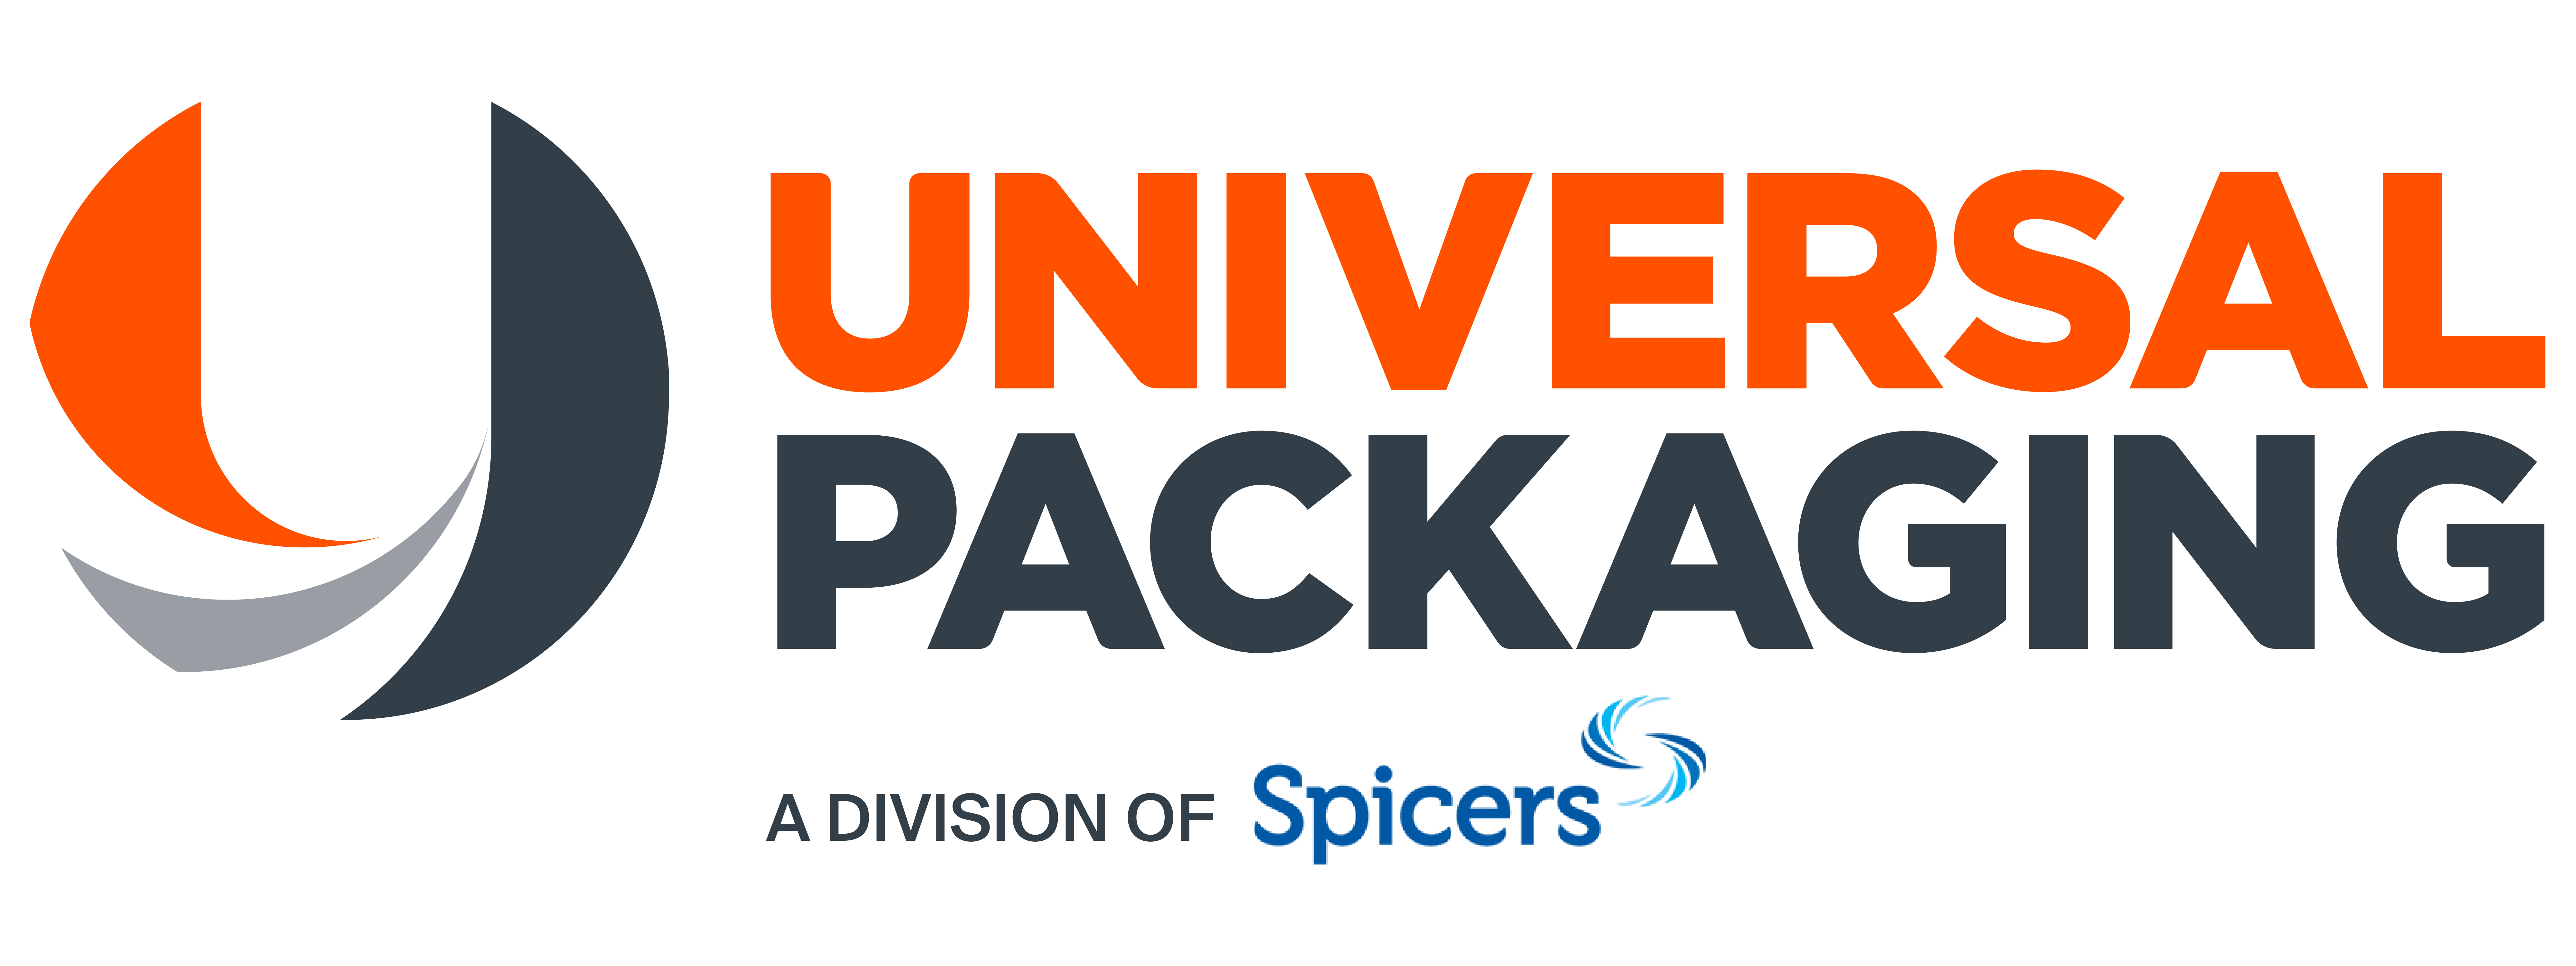 Universal Packaging Ltd